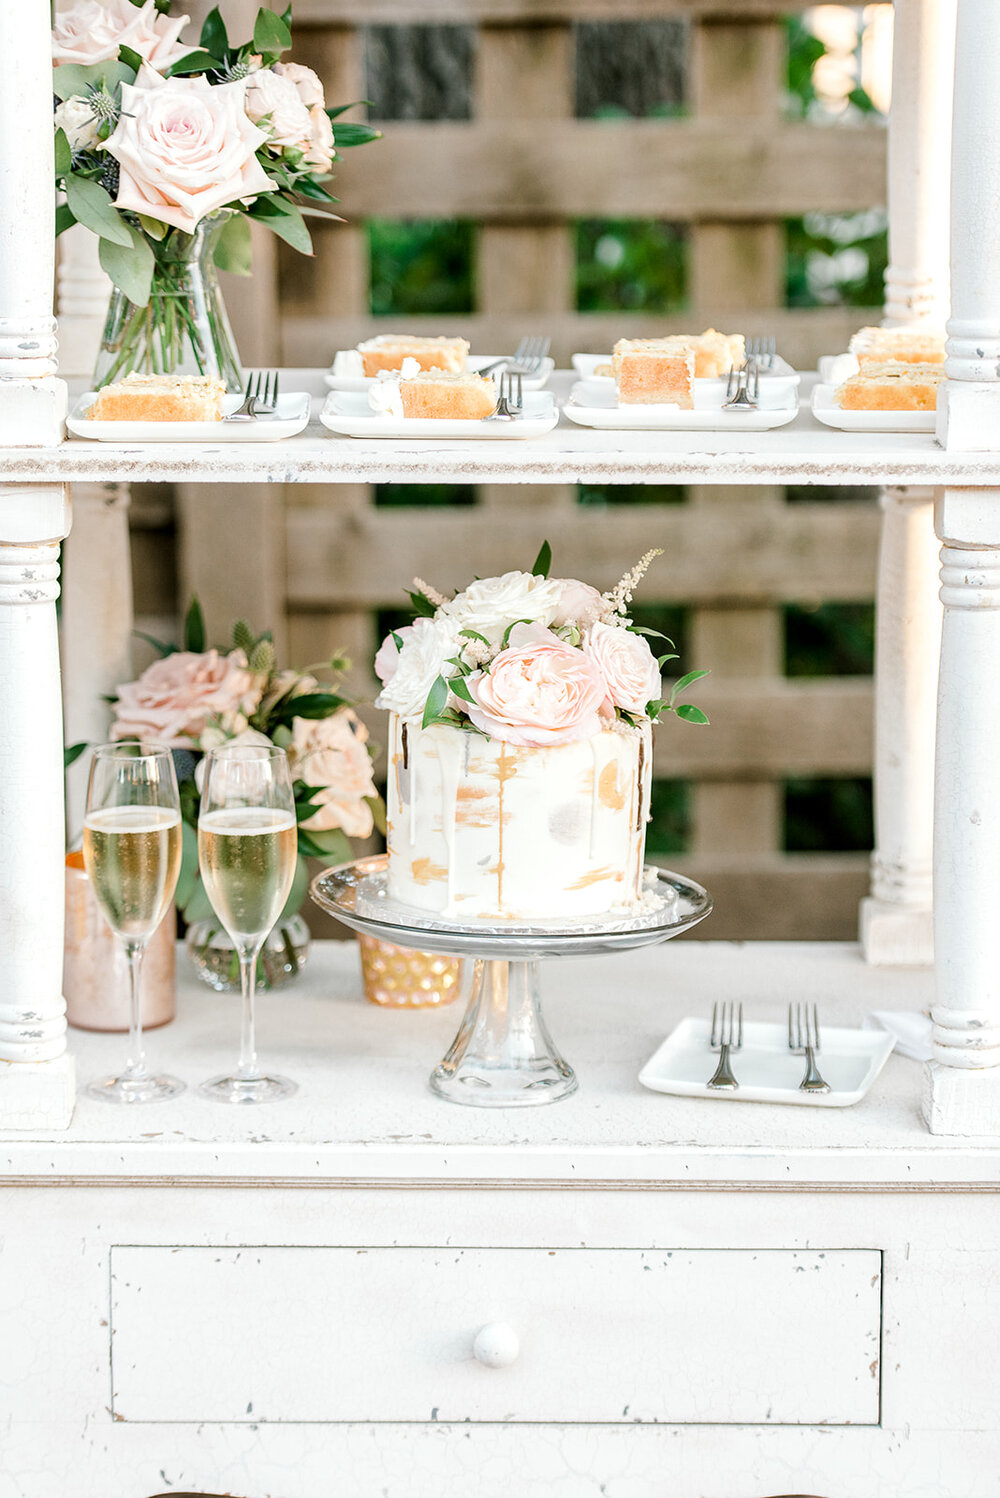 Violette-fleurs-roseville-napa-california-luxury-florist-silverado-resort-and-spa- weddings-by-scott-and-dana-cutting-cake.jpg